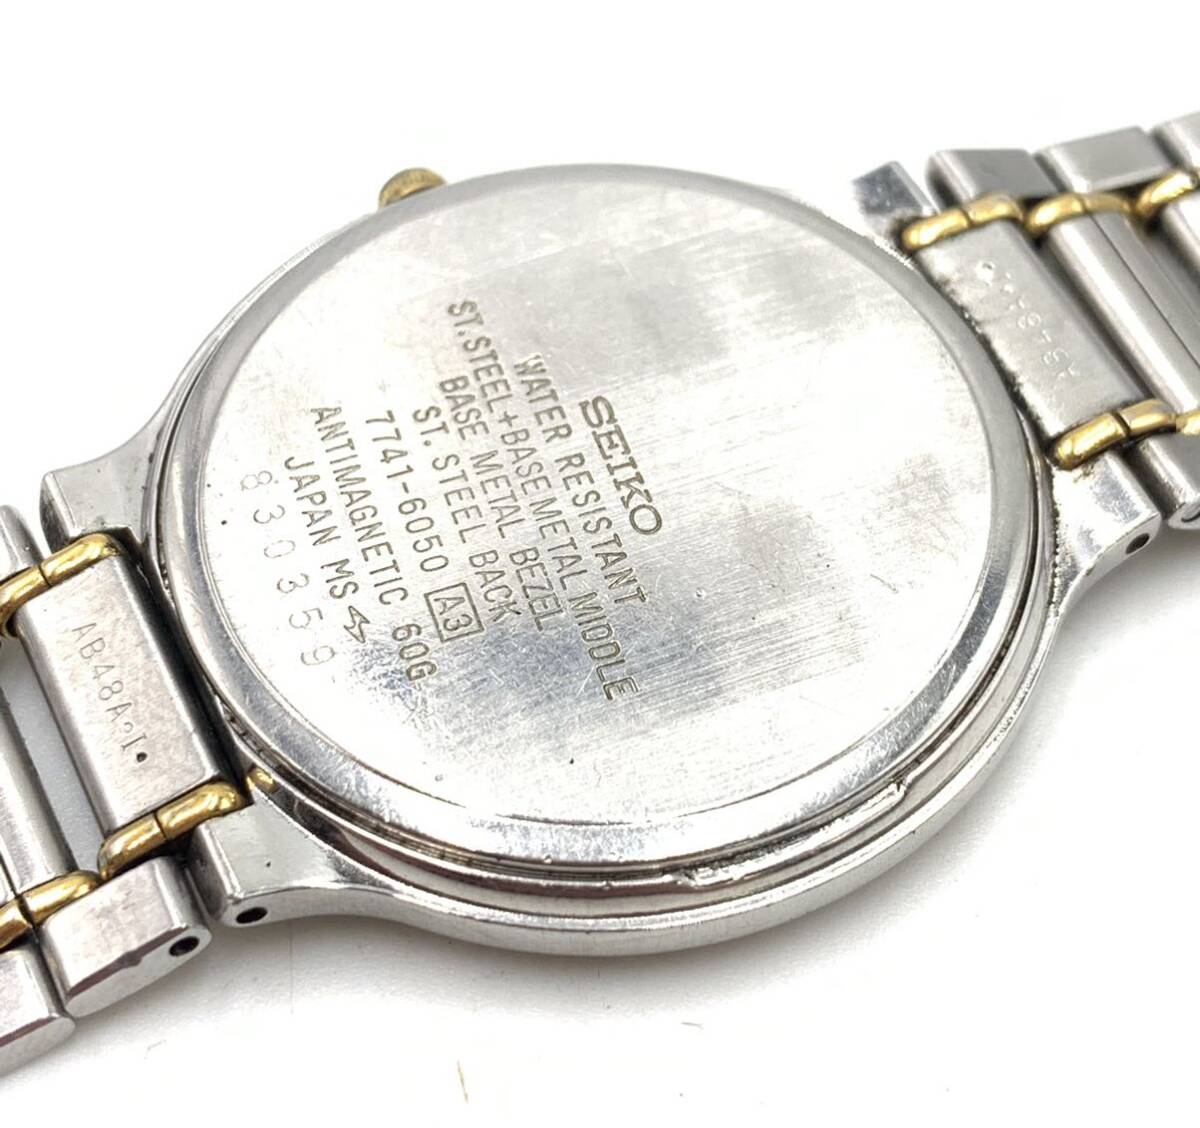  Seiko Dolce brand Gold wristwatch 7741-6050 men's stylish 